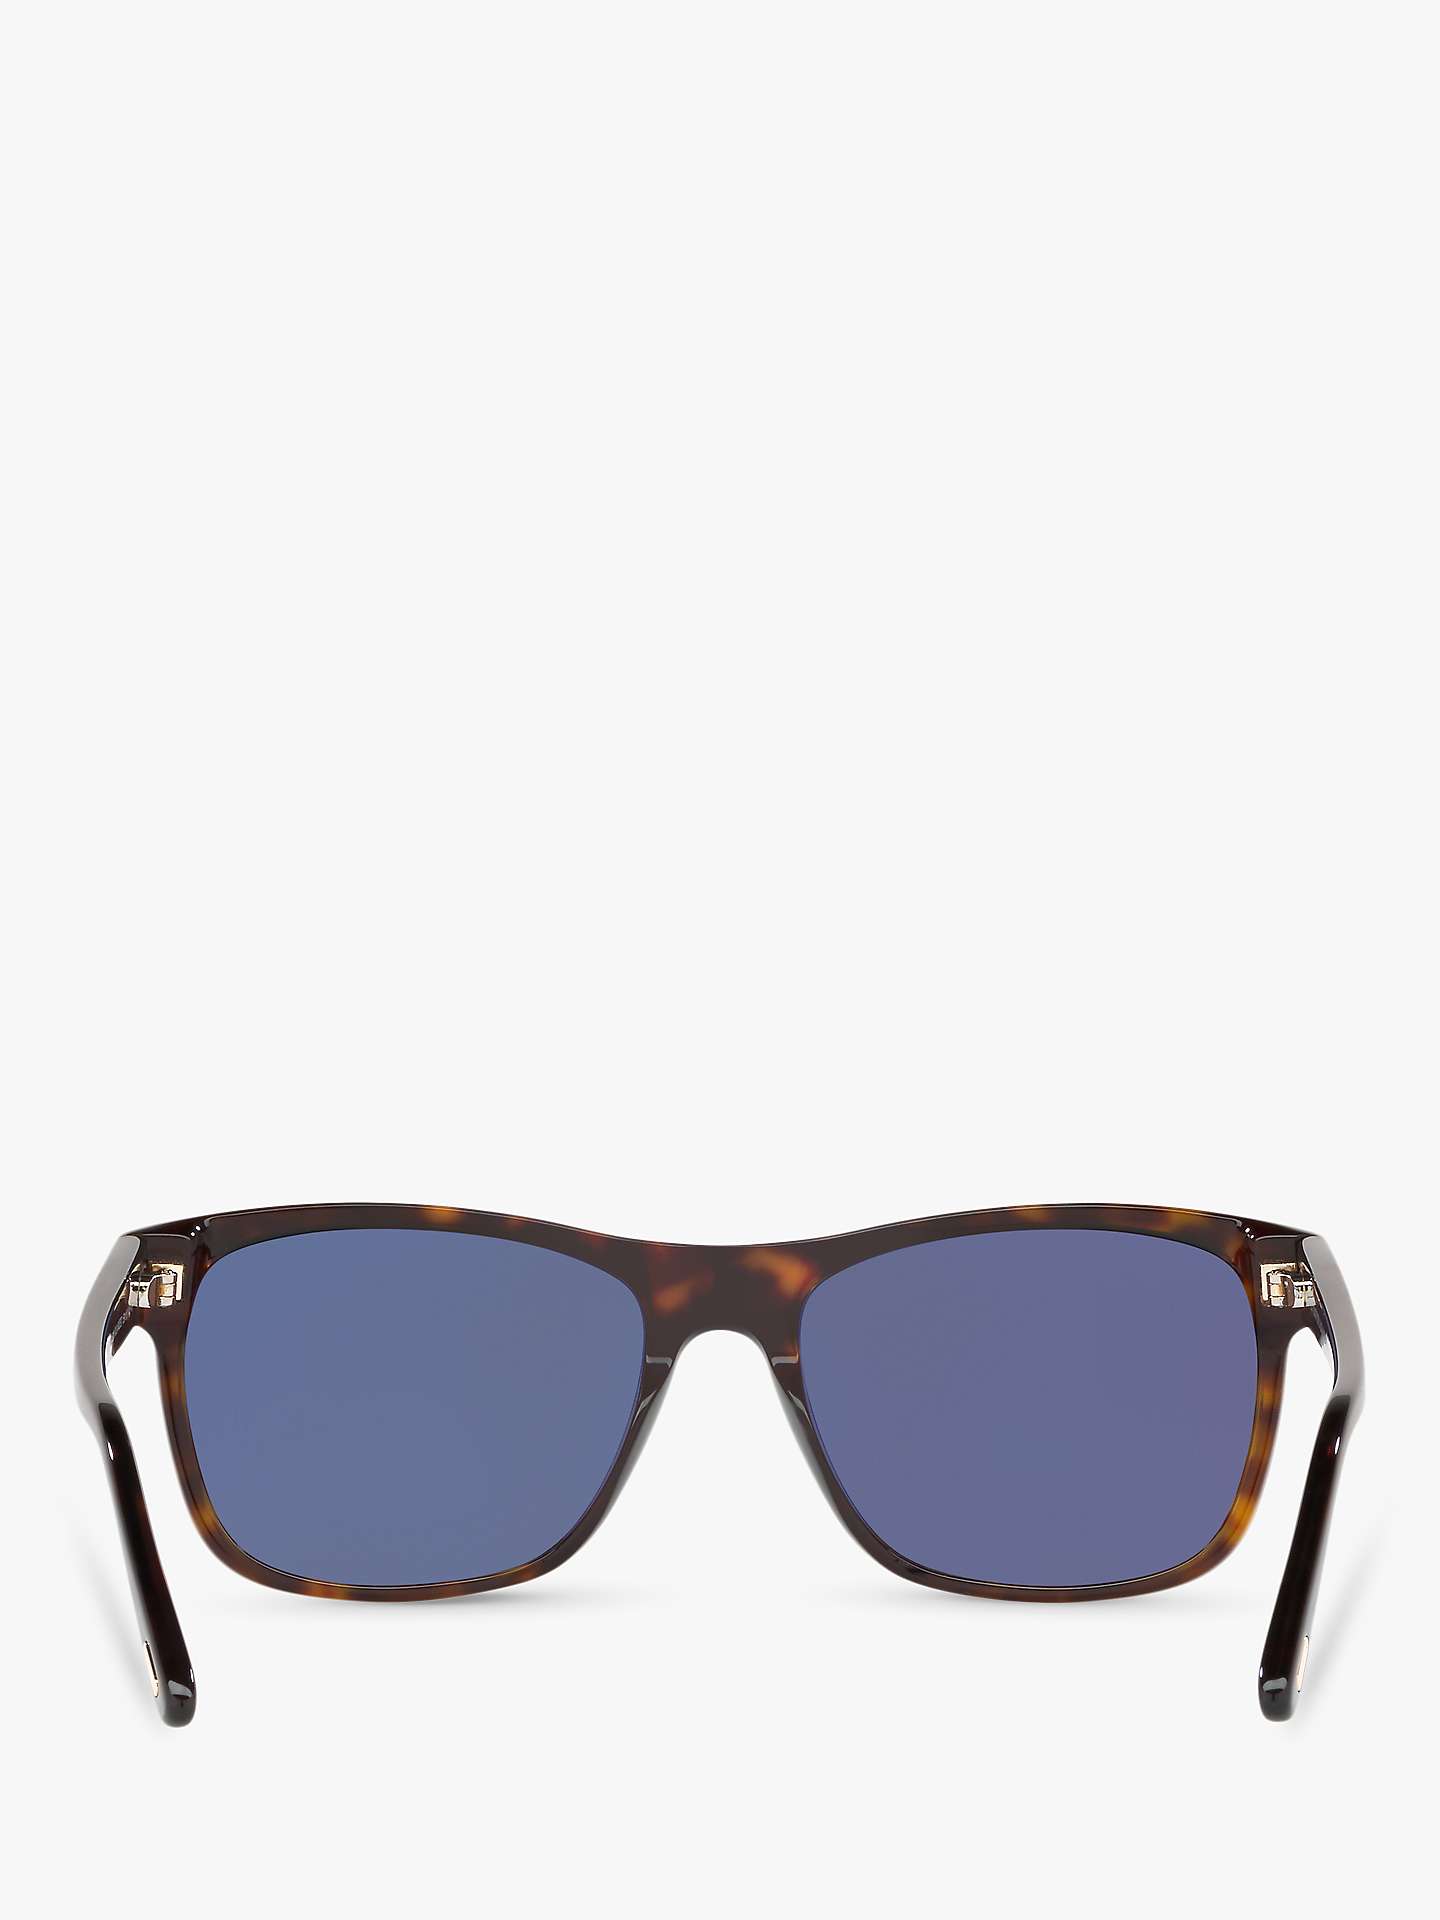 Buy TOM FORD FT0698 Men's Giulio Polarised Square Sunglasses, Tortoise/Grey Online at johnlewis.com